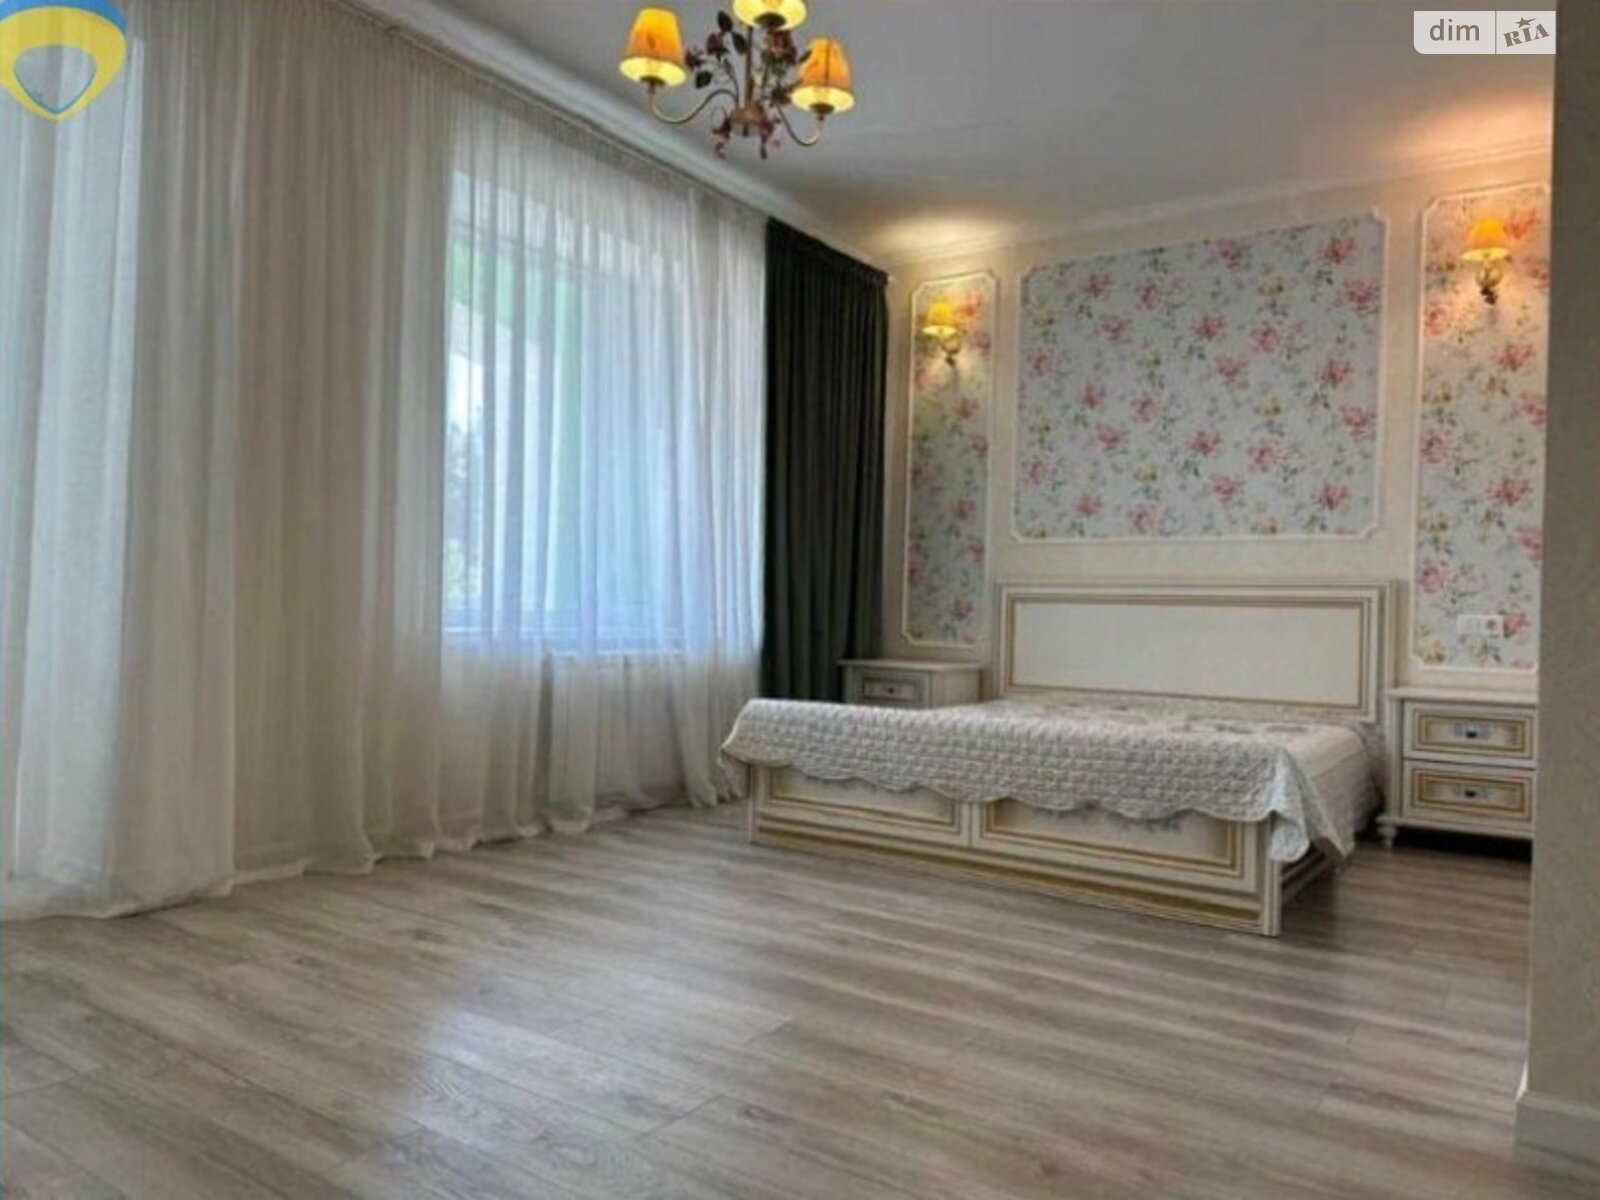 Продажа части дома в Одессе, 4 комнаты фото 1